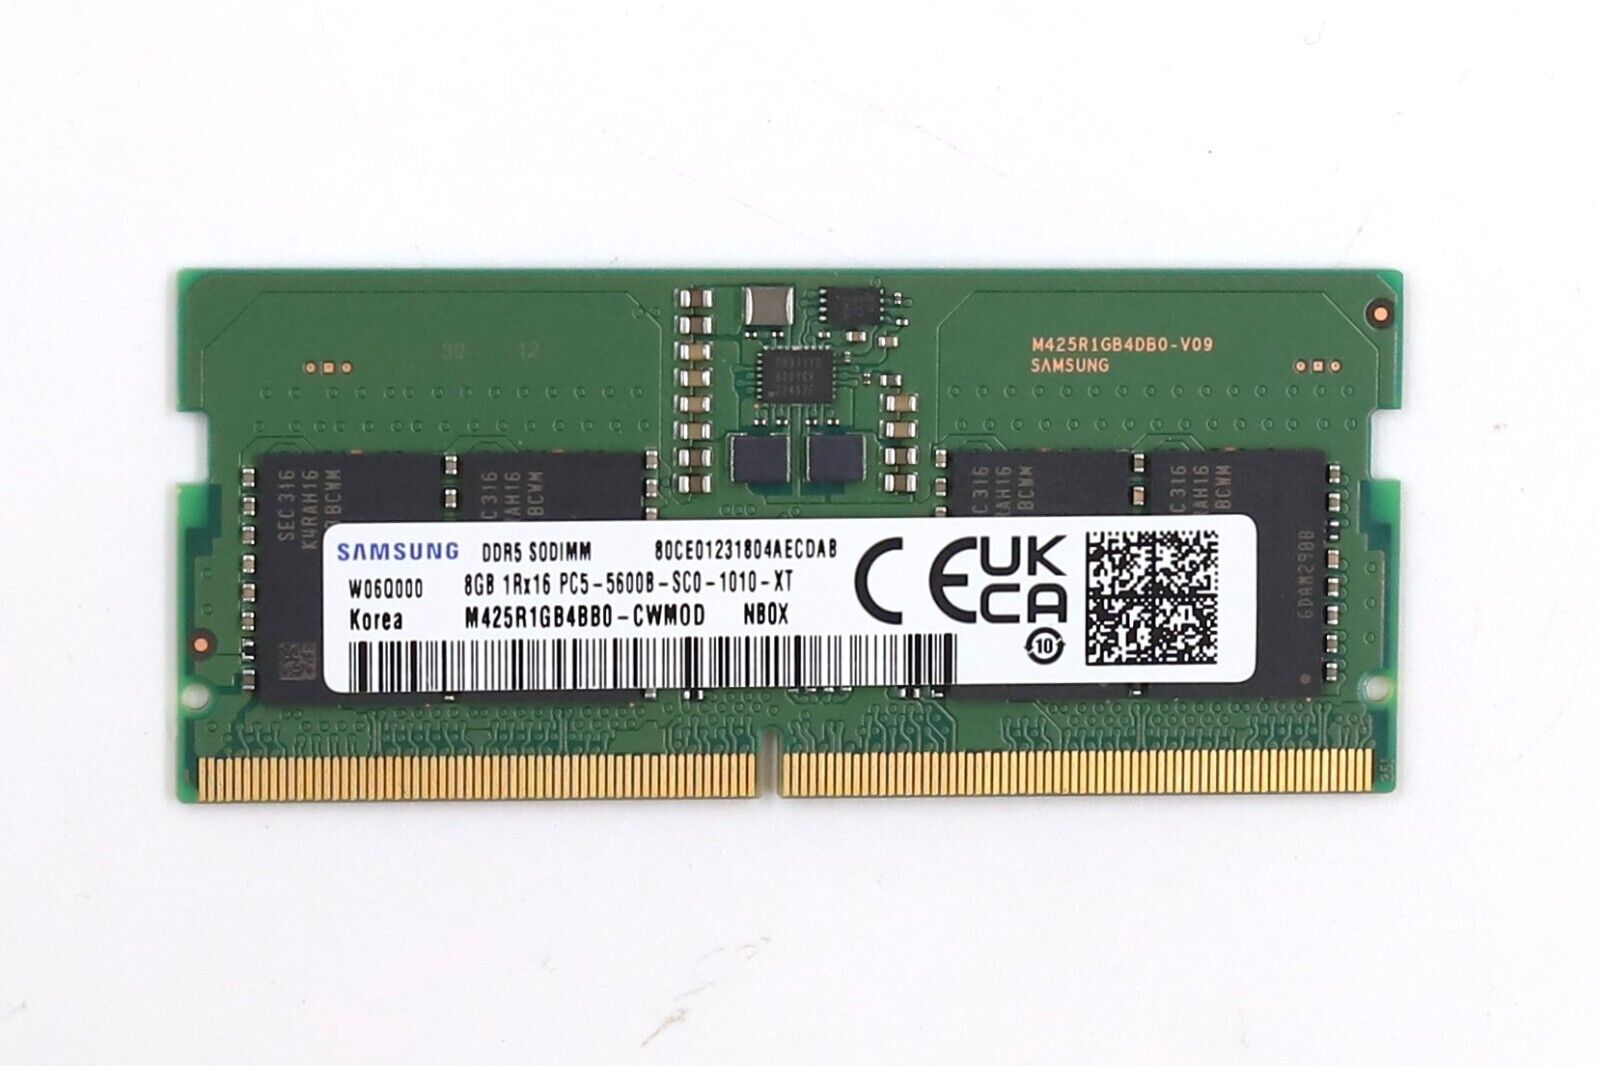 Samsung 8GB 1Rx16 PC5-5600B-SC0-1010-XT Laptop Memory M425R1GB4BB0-CWM0D Tested